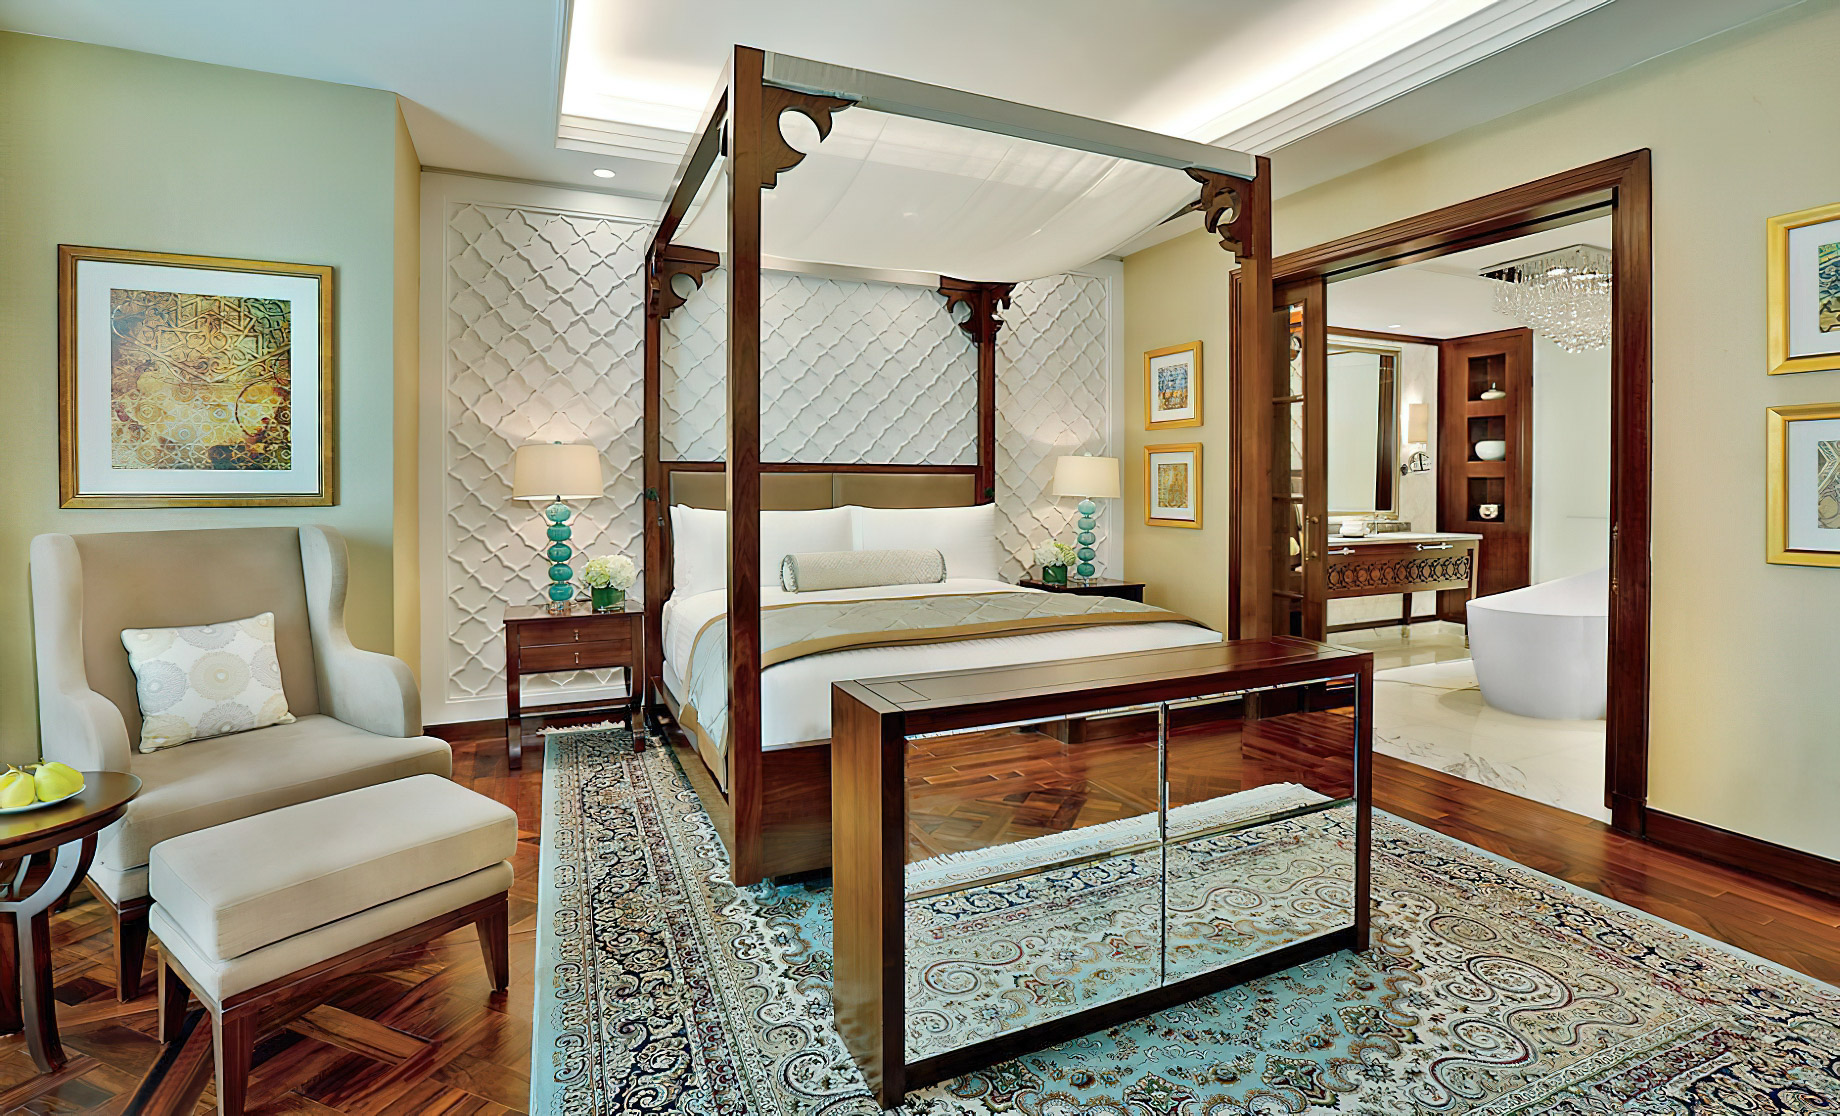 The Ritz-Carlton, Dubai Hotel - JBR Beach, Dubai, UAE - Emirites Suite